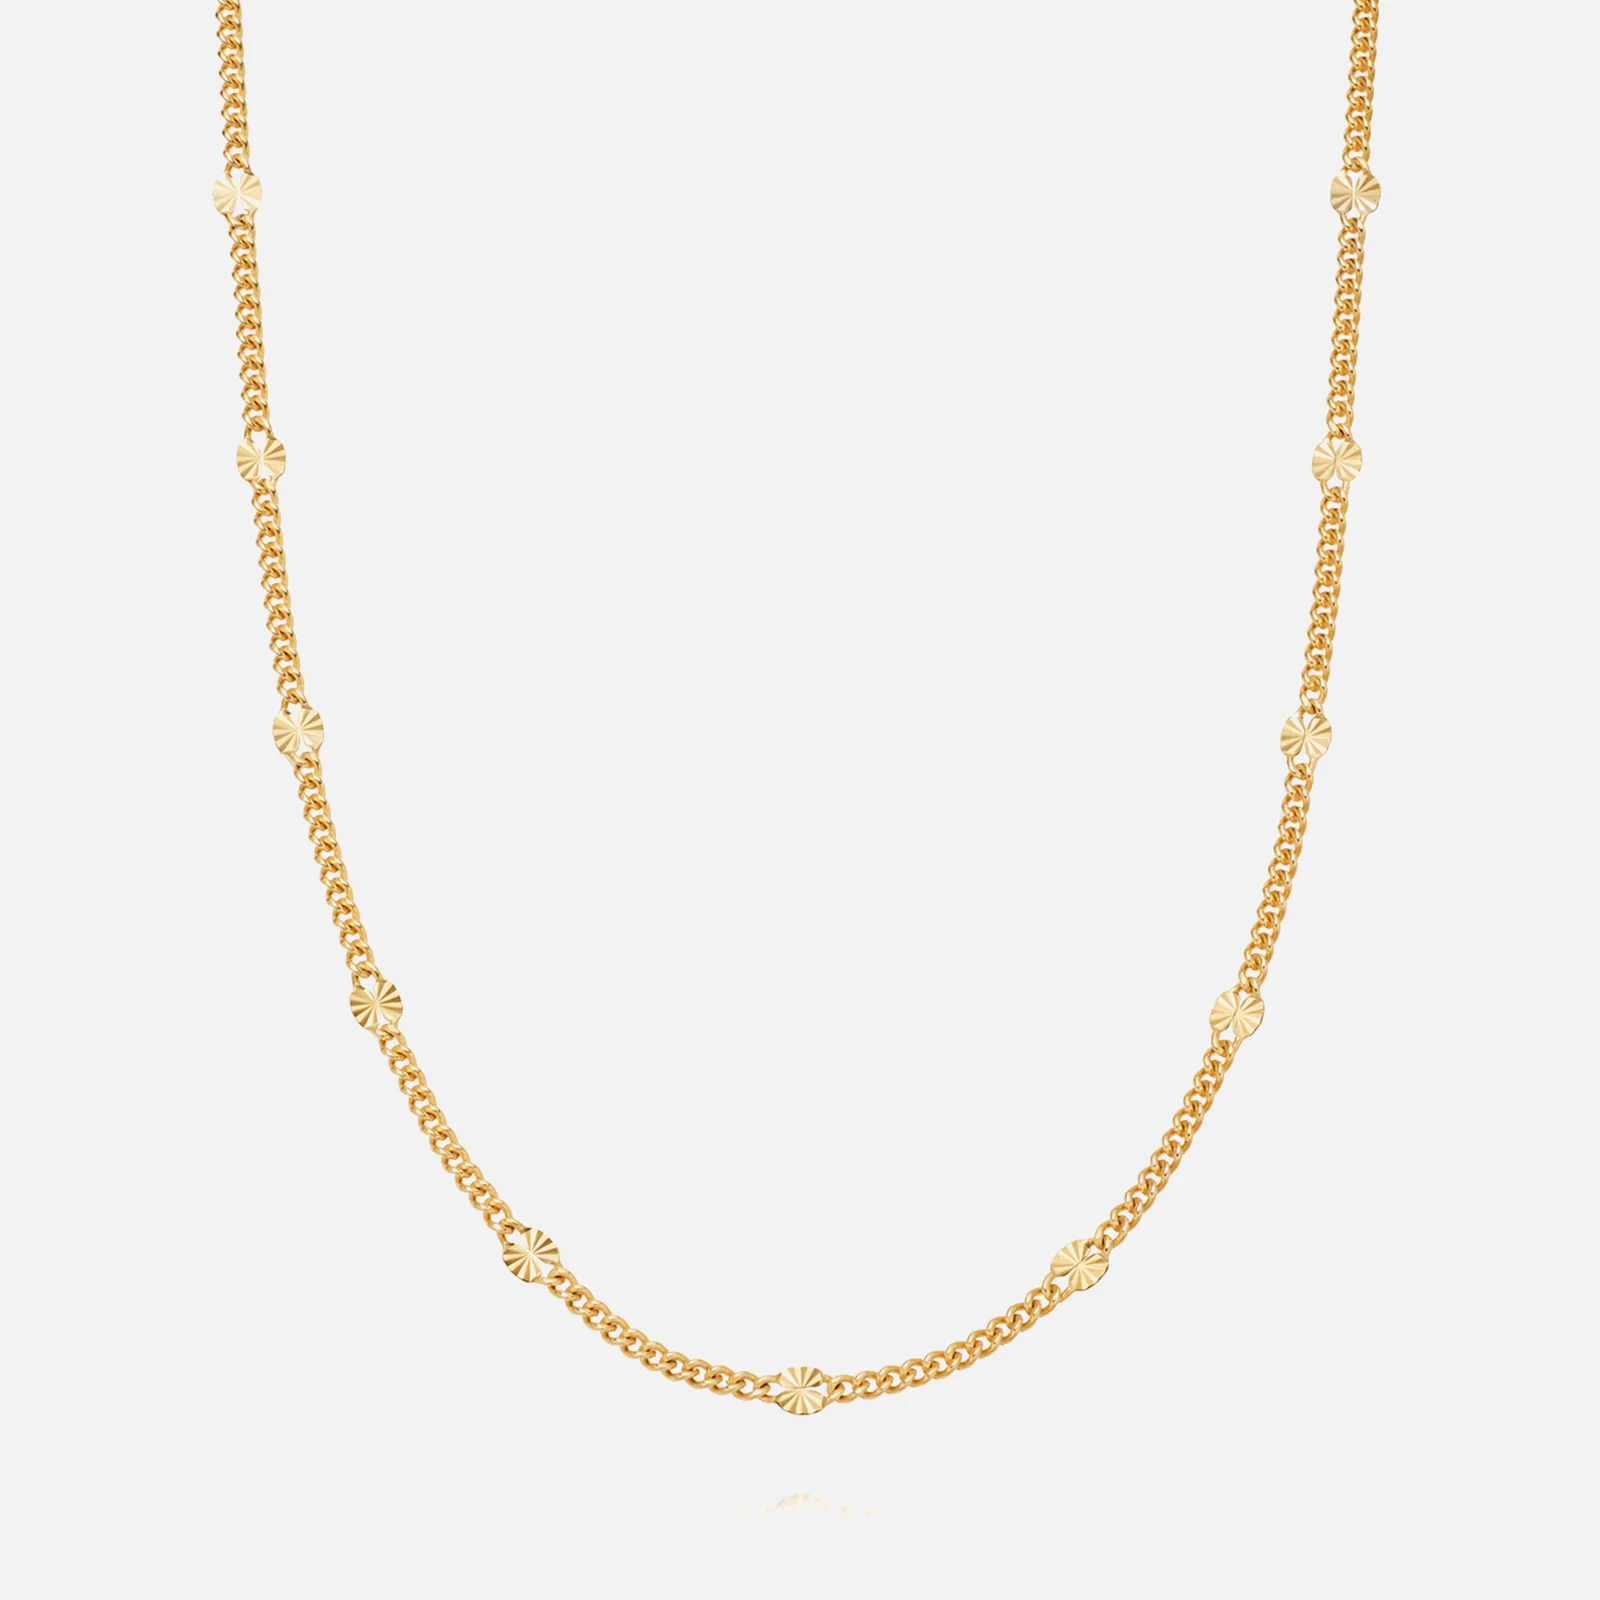 Daisy London Estée Lalonde Sunburst 18-Karat Gold-Plated Necklace Image 1